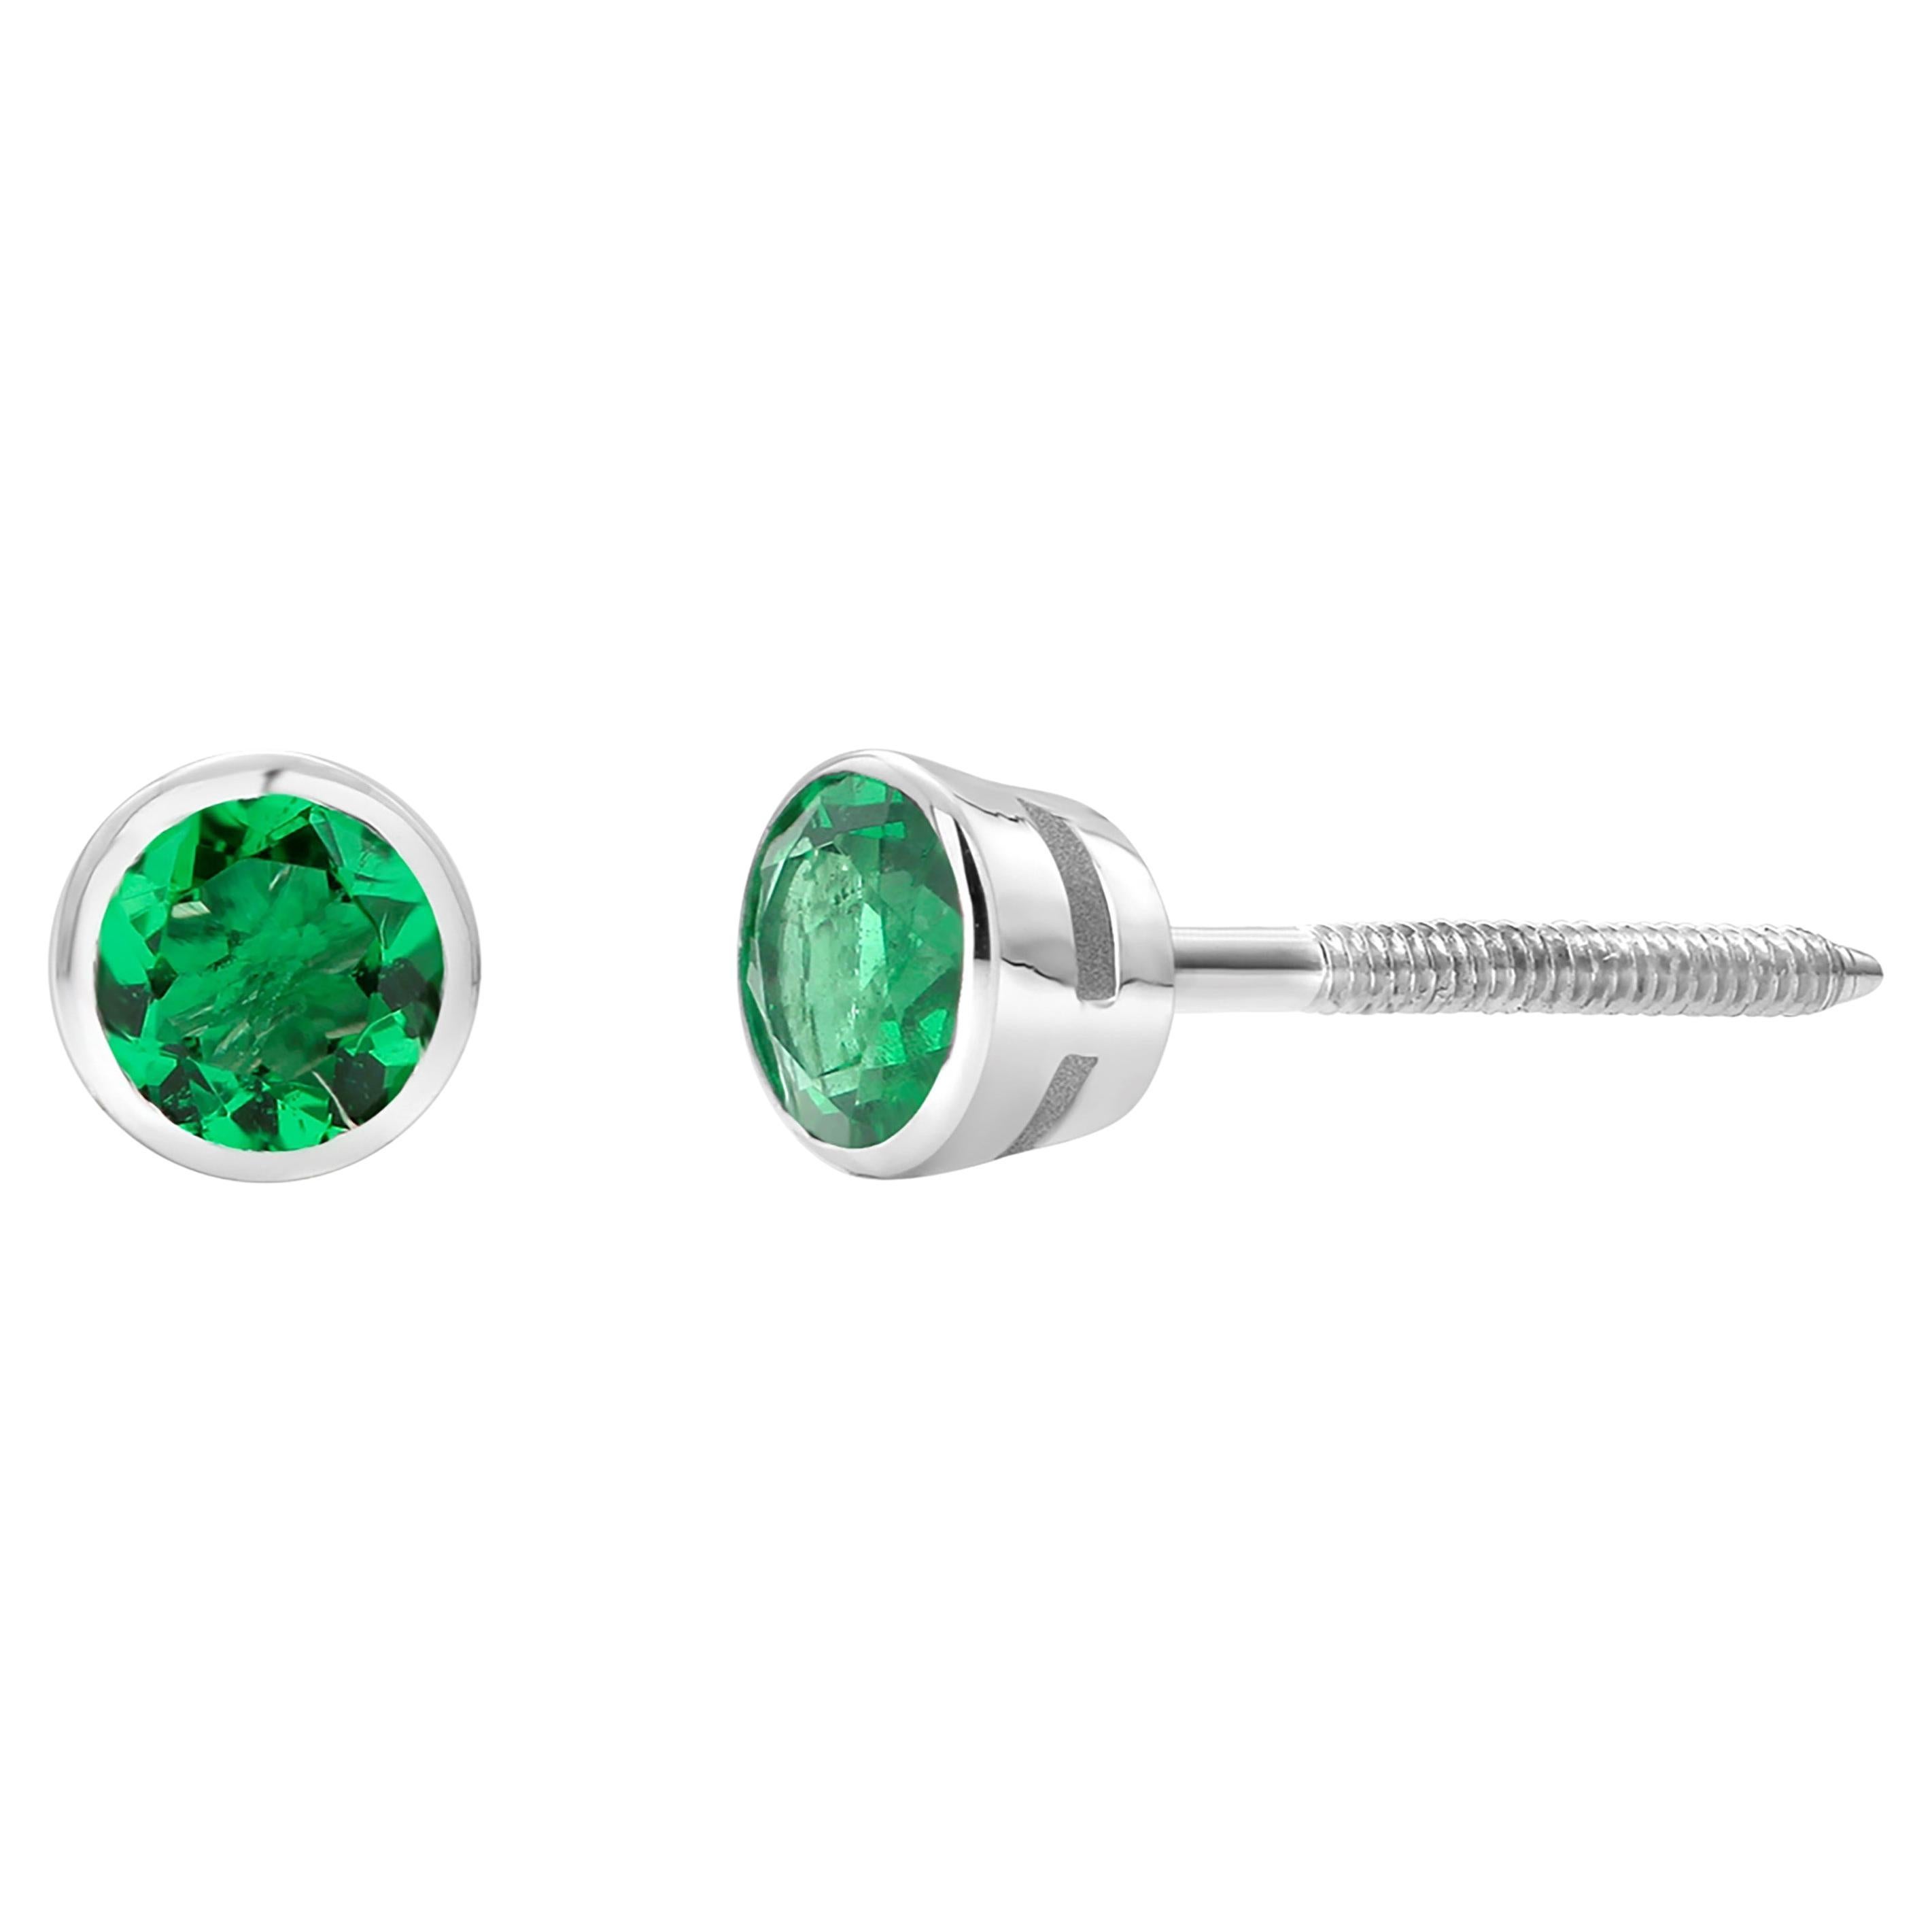 White Gold Bezel Round Emerald Stud Earrings